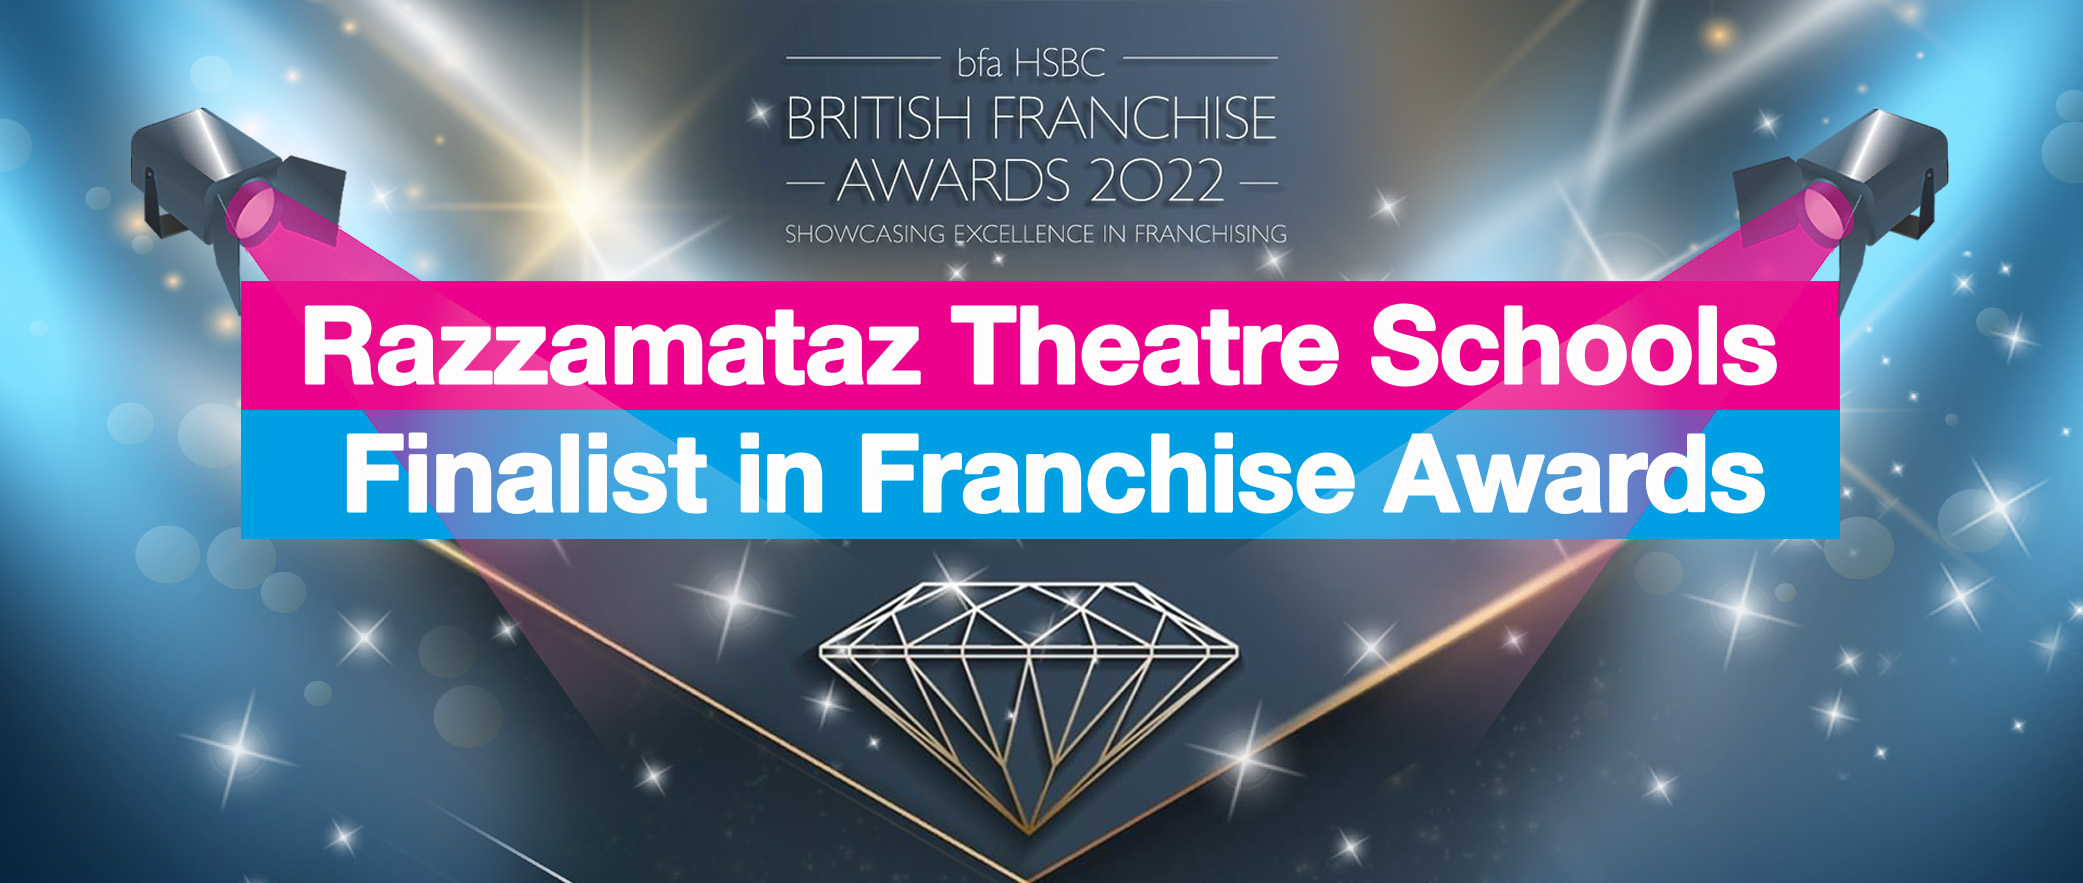 Razzamataz Theatre Schools Finalist in Franchise Awards